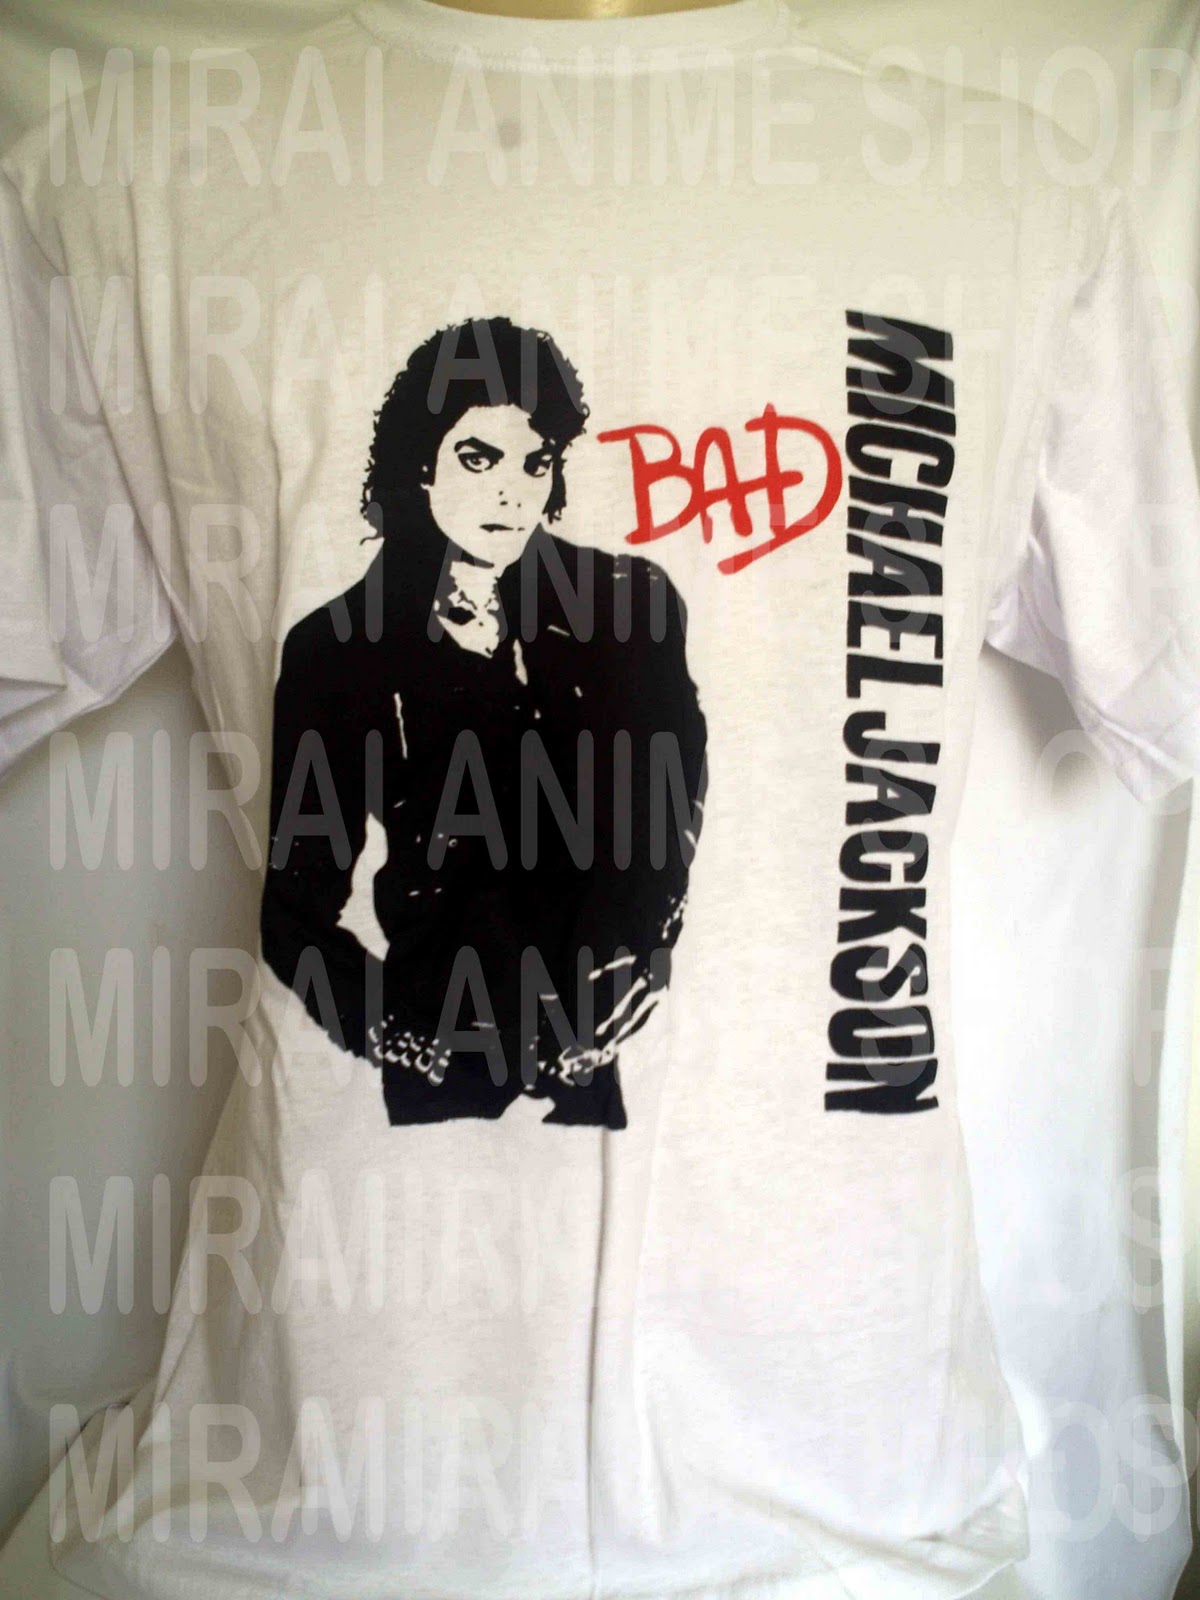 http://2.bp.blogspot.com/_jQVlK6NRoLA/TSshdHYcMqI/AAAAAAAAAe8/BavDPPYvr_k/s1600/michael_jackson_t-shirt.jpg